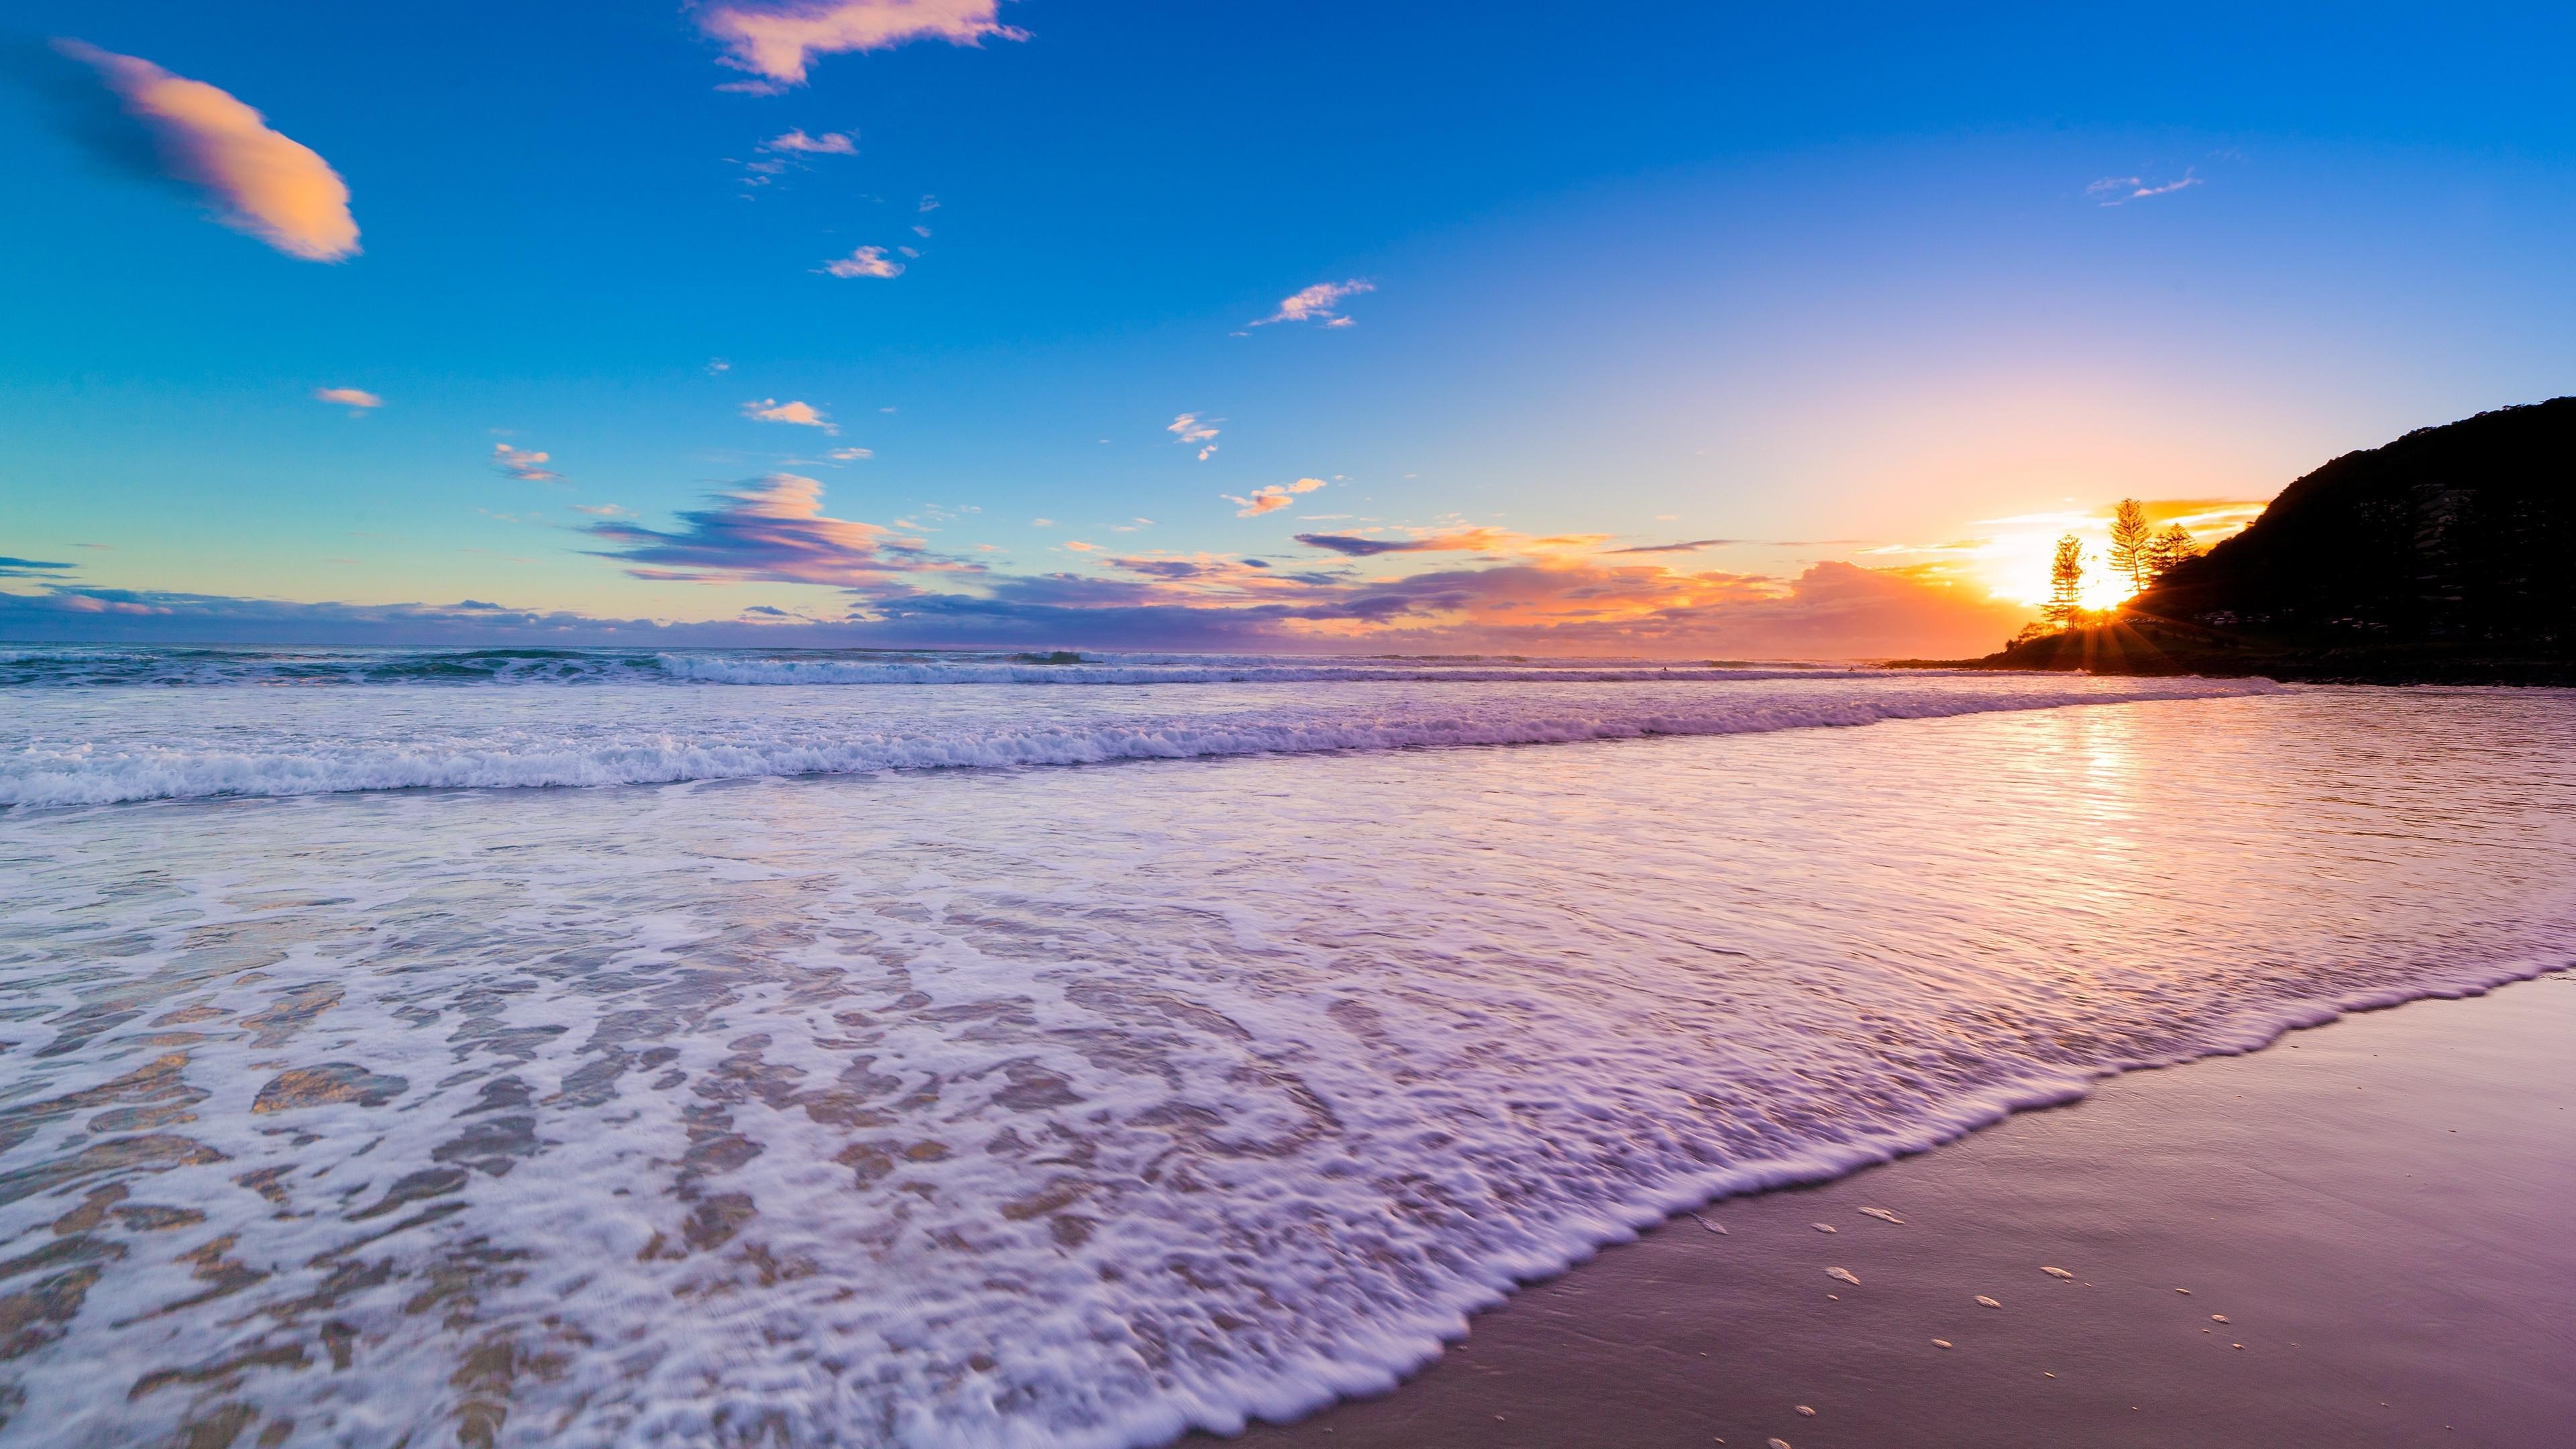 Beautiful Beach Sunset 4k, HD Nature, 4k Wallpapers, Image, Backgrounds, Ph...